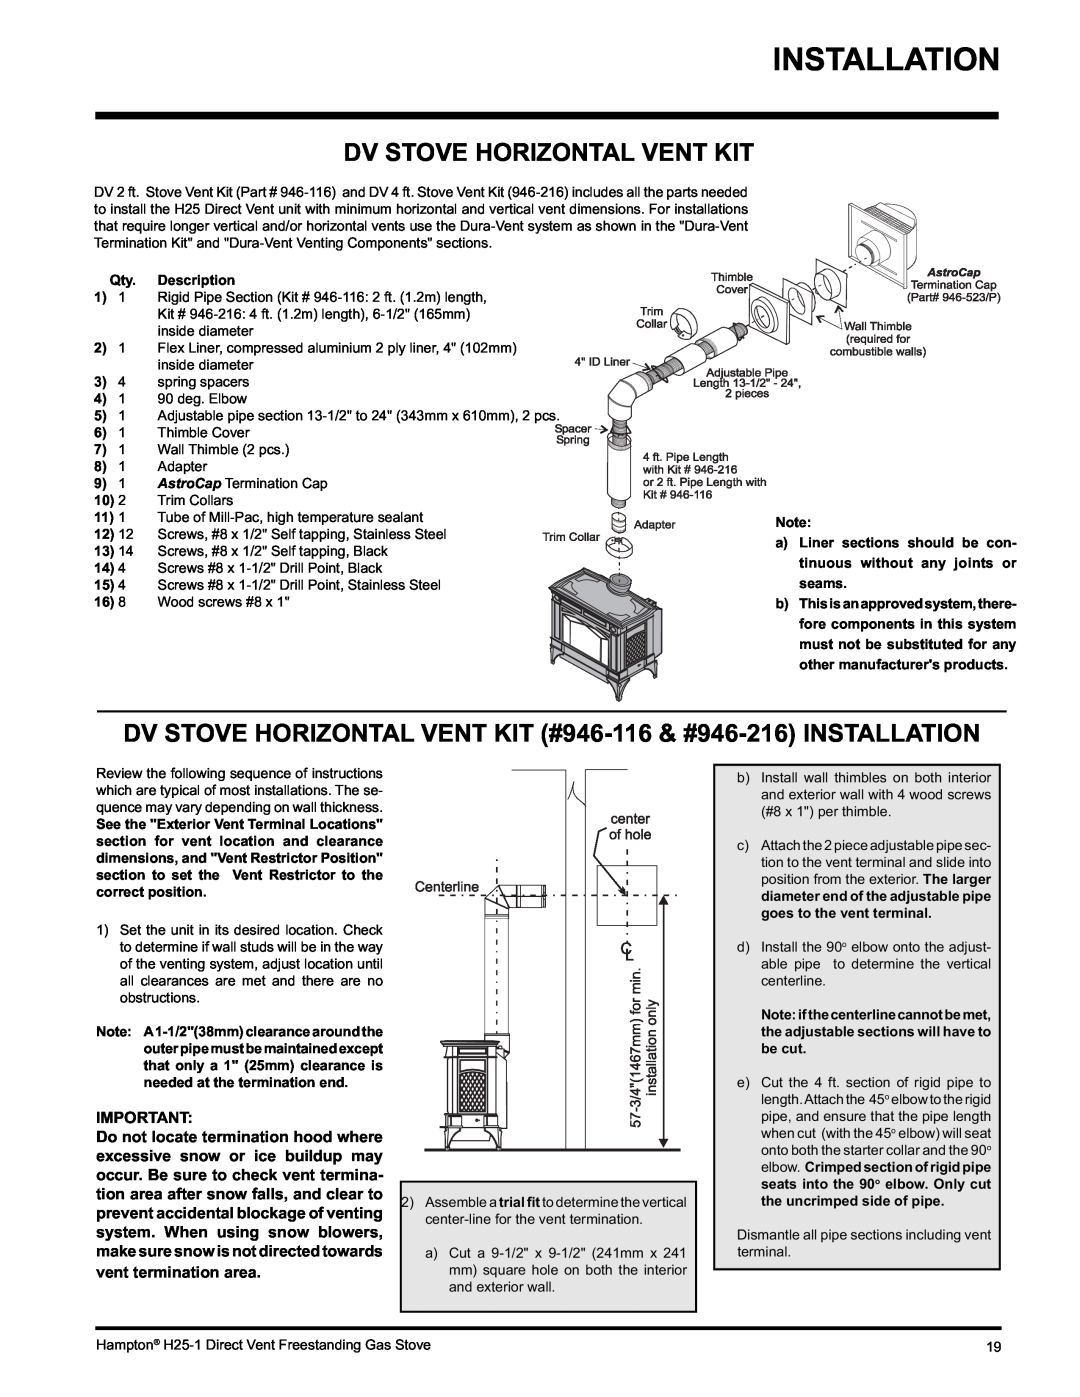 Hampton Direct H25-LP1 Propane, H25-NG1, H25-LP1 installation manual Dv Stove Horizontal Vent Kit, Qty. Description 